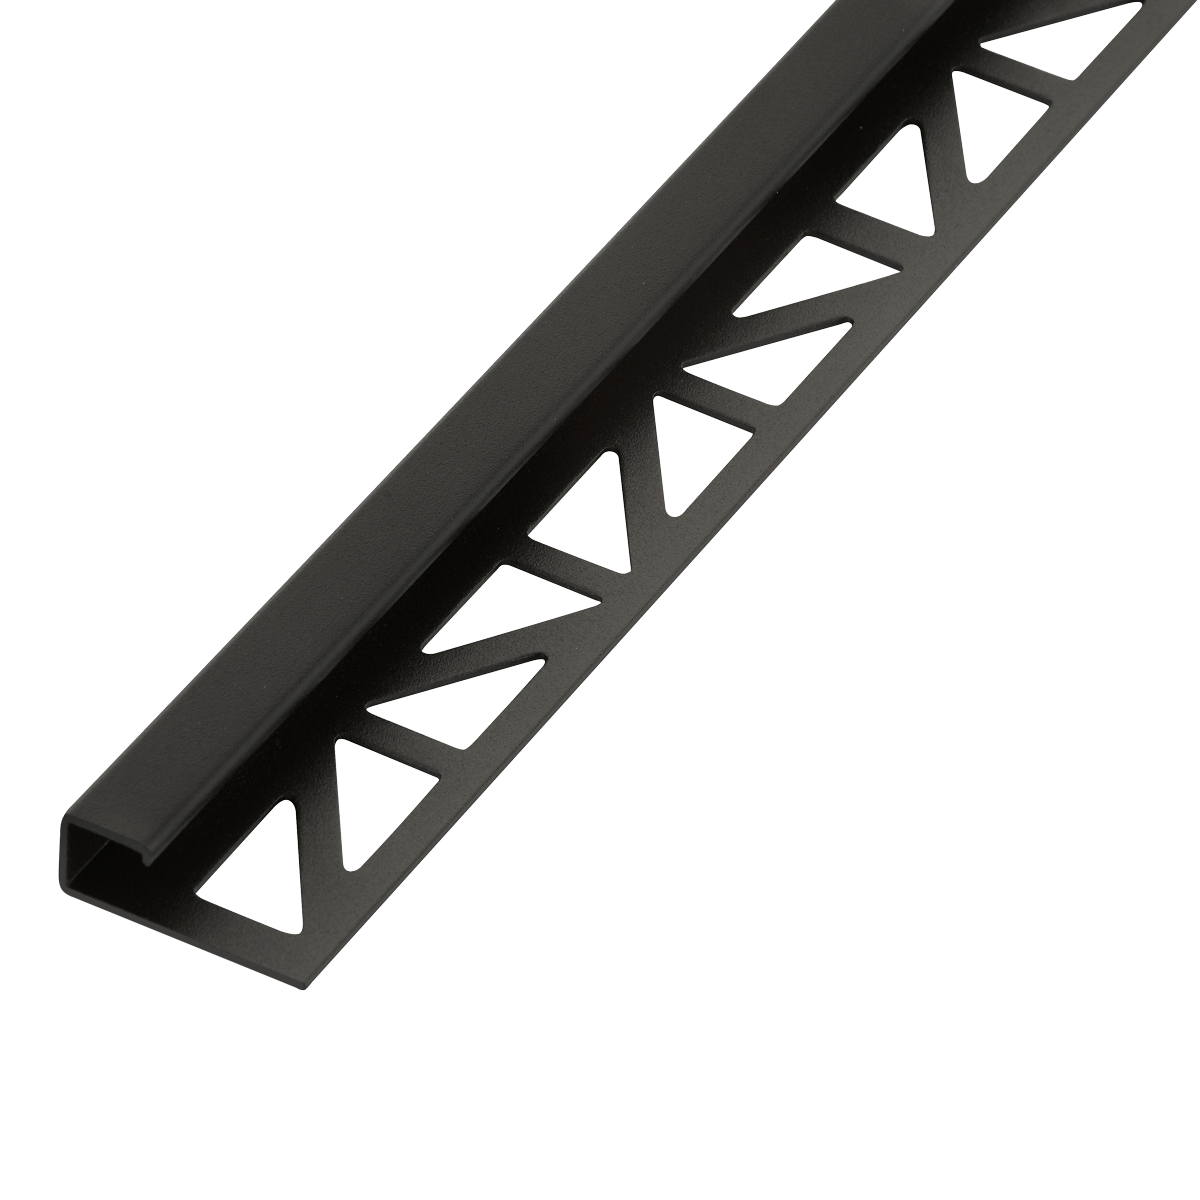 Blanke Fliesenschiene CUBELINE quadratische Form Aluminium eloxiert schwarz matt 11 mm hoch 2,5 lang